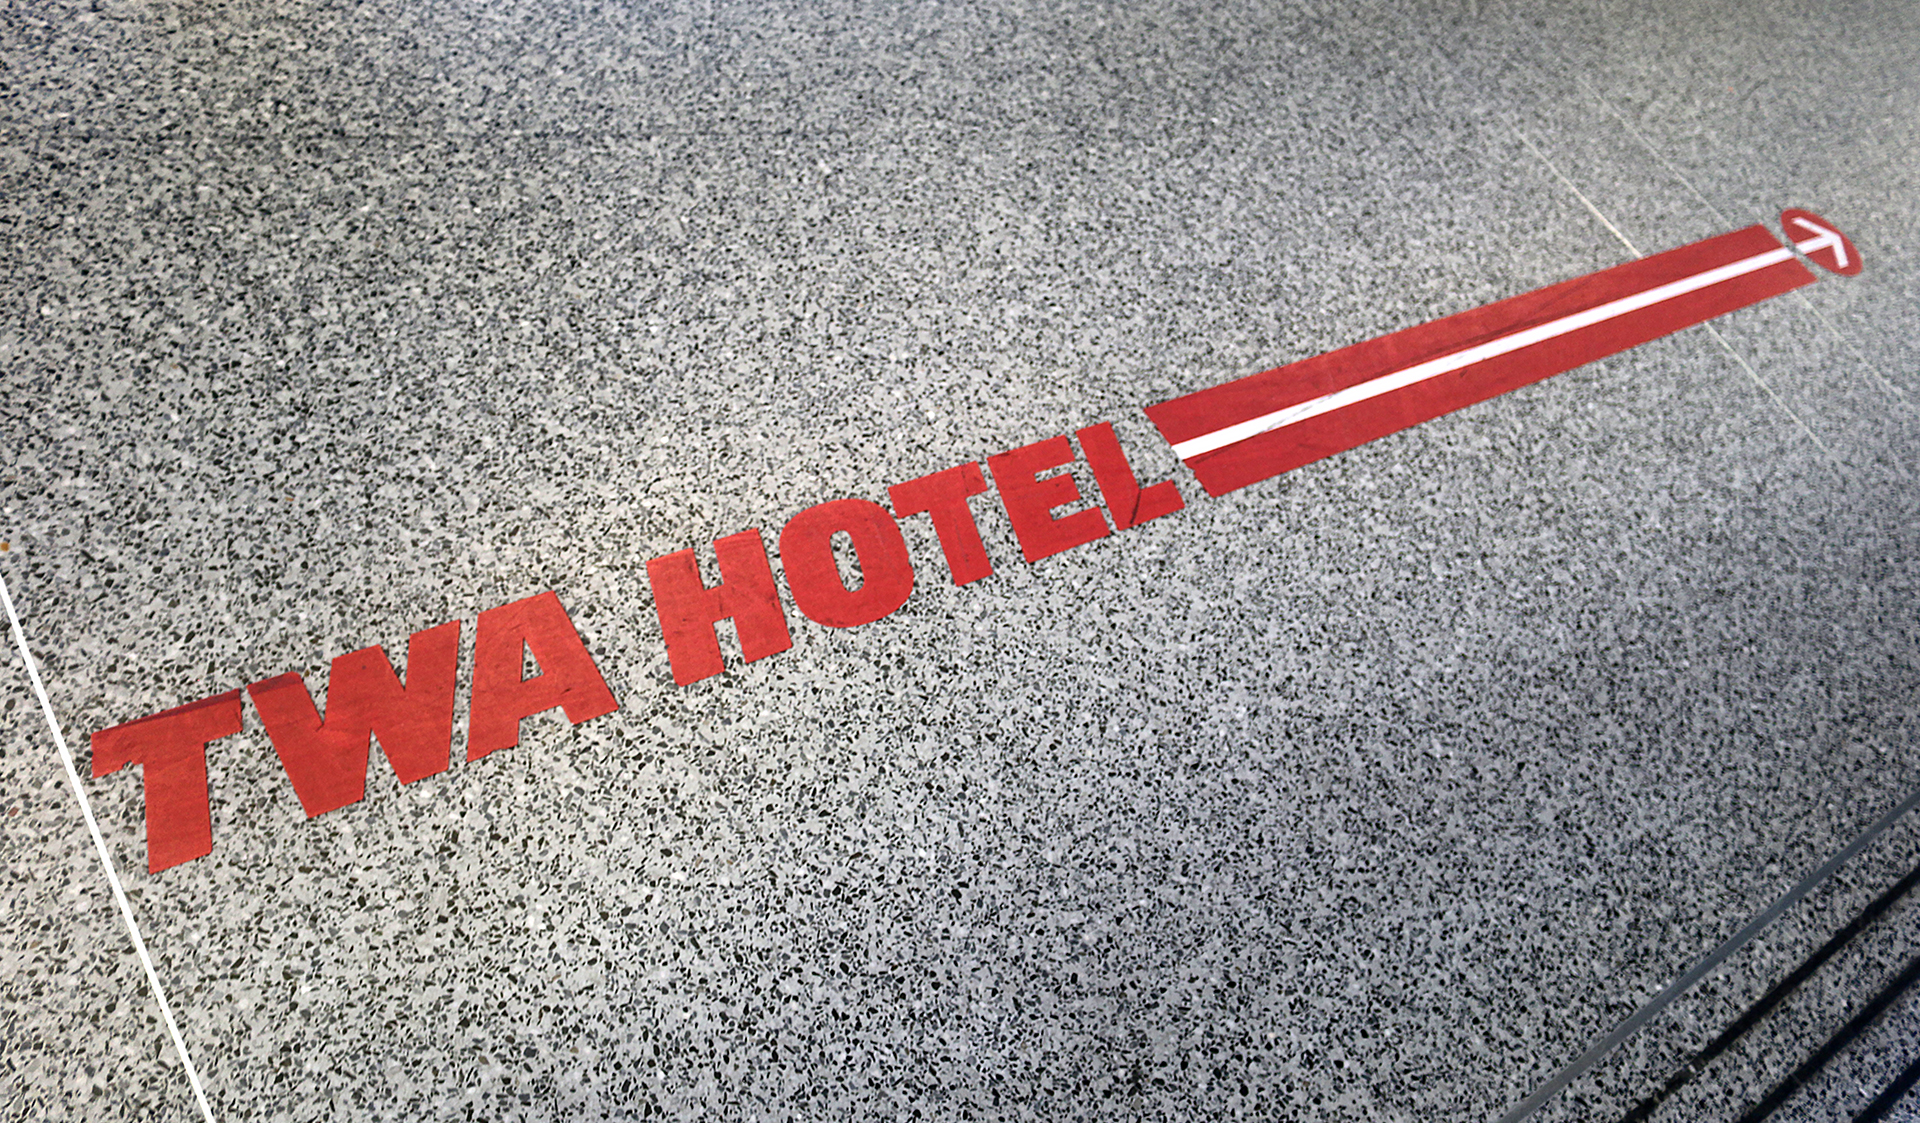 TWA Hotel advertising